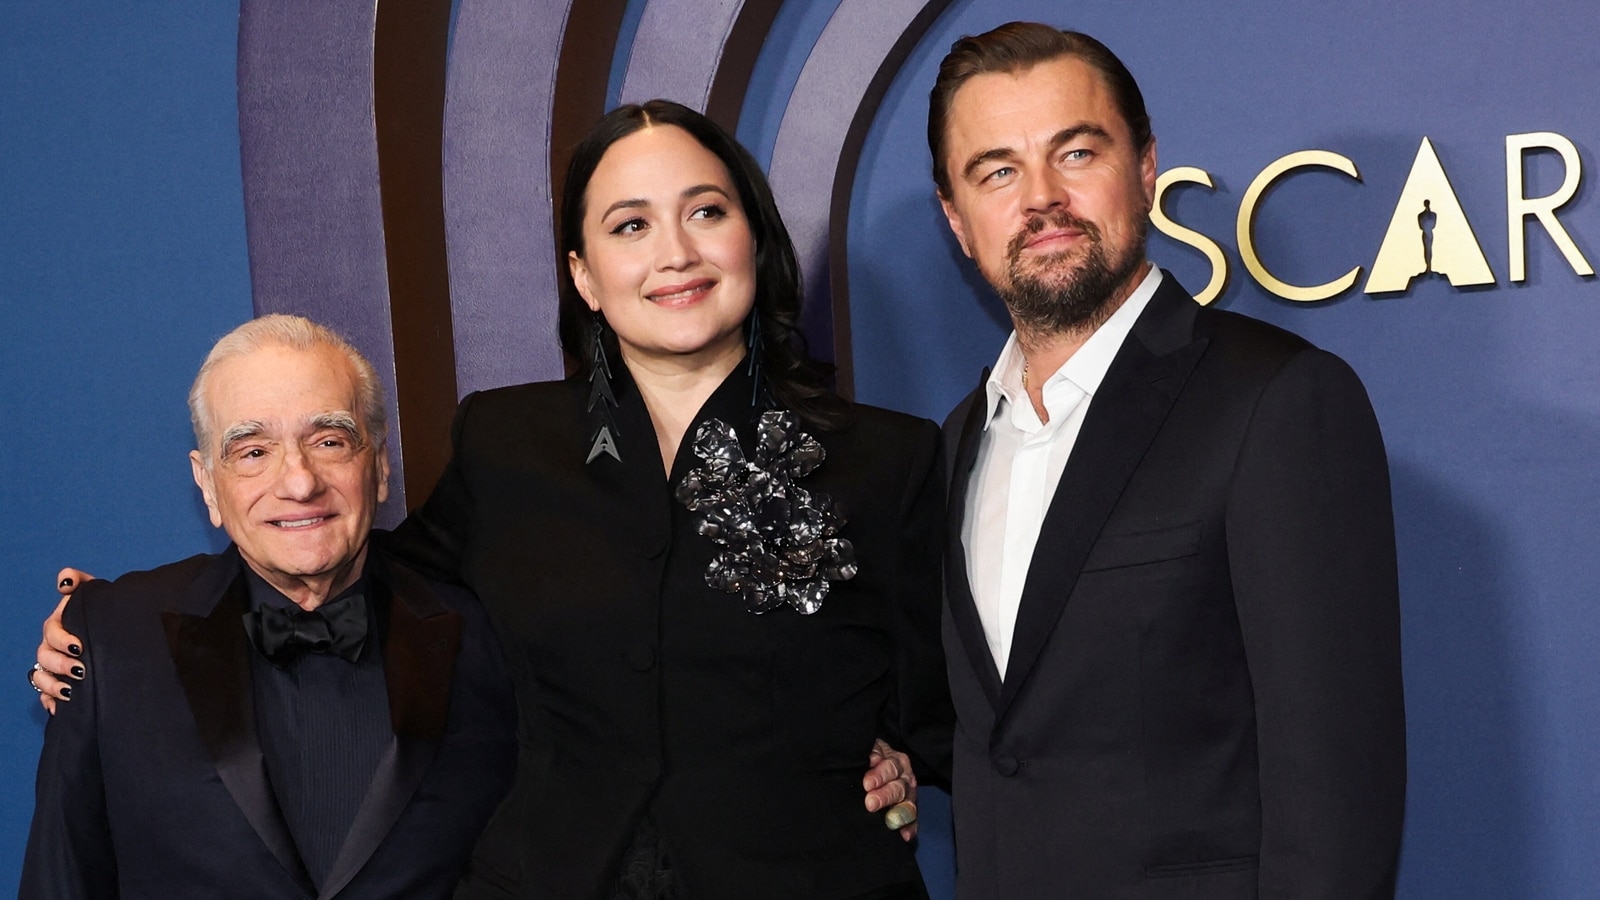 Martin Scorsese, Lily Gladstone react to Leonardo DiCaprio’s Oscars snub | Hollywood